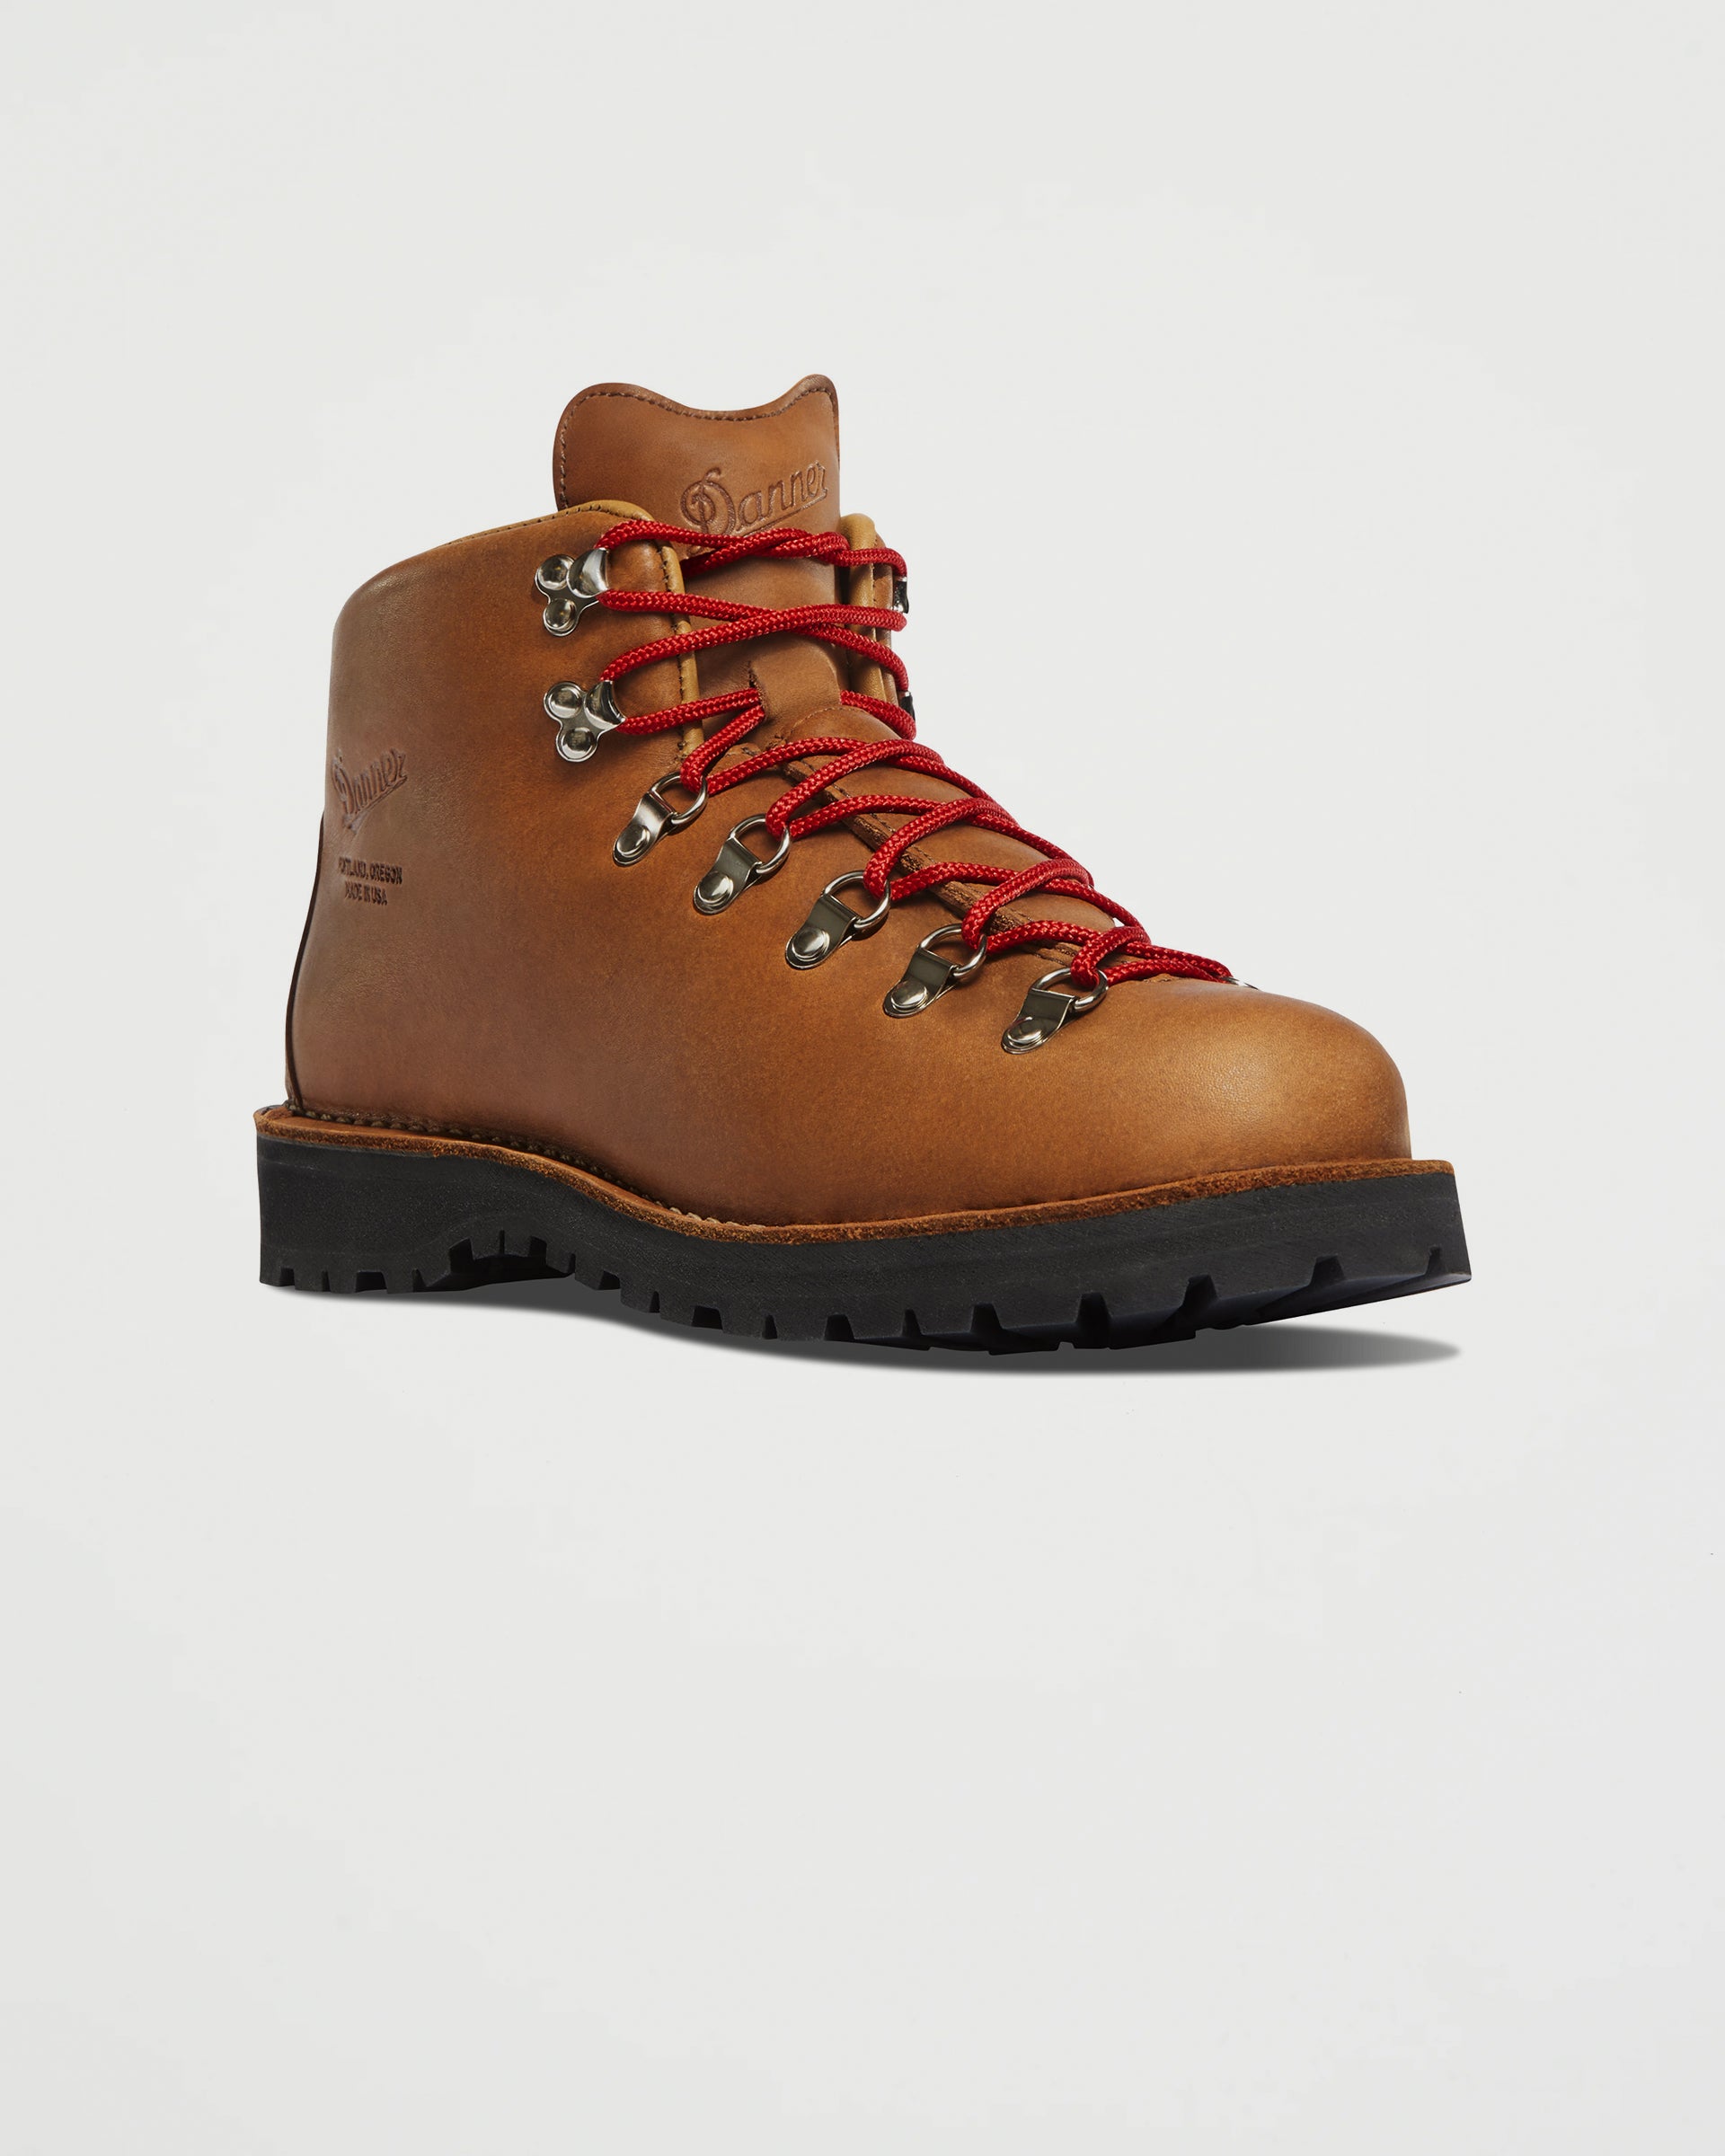 Danner Mountain Light GORE-TEX Cascade Clovis Shoes Leather Men